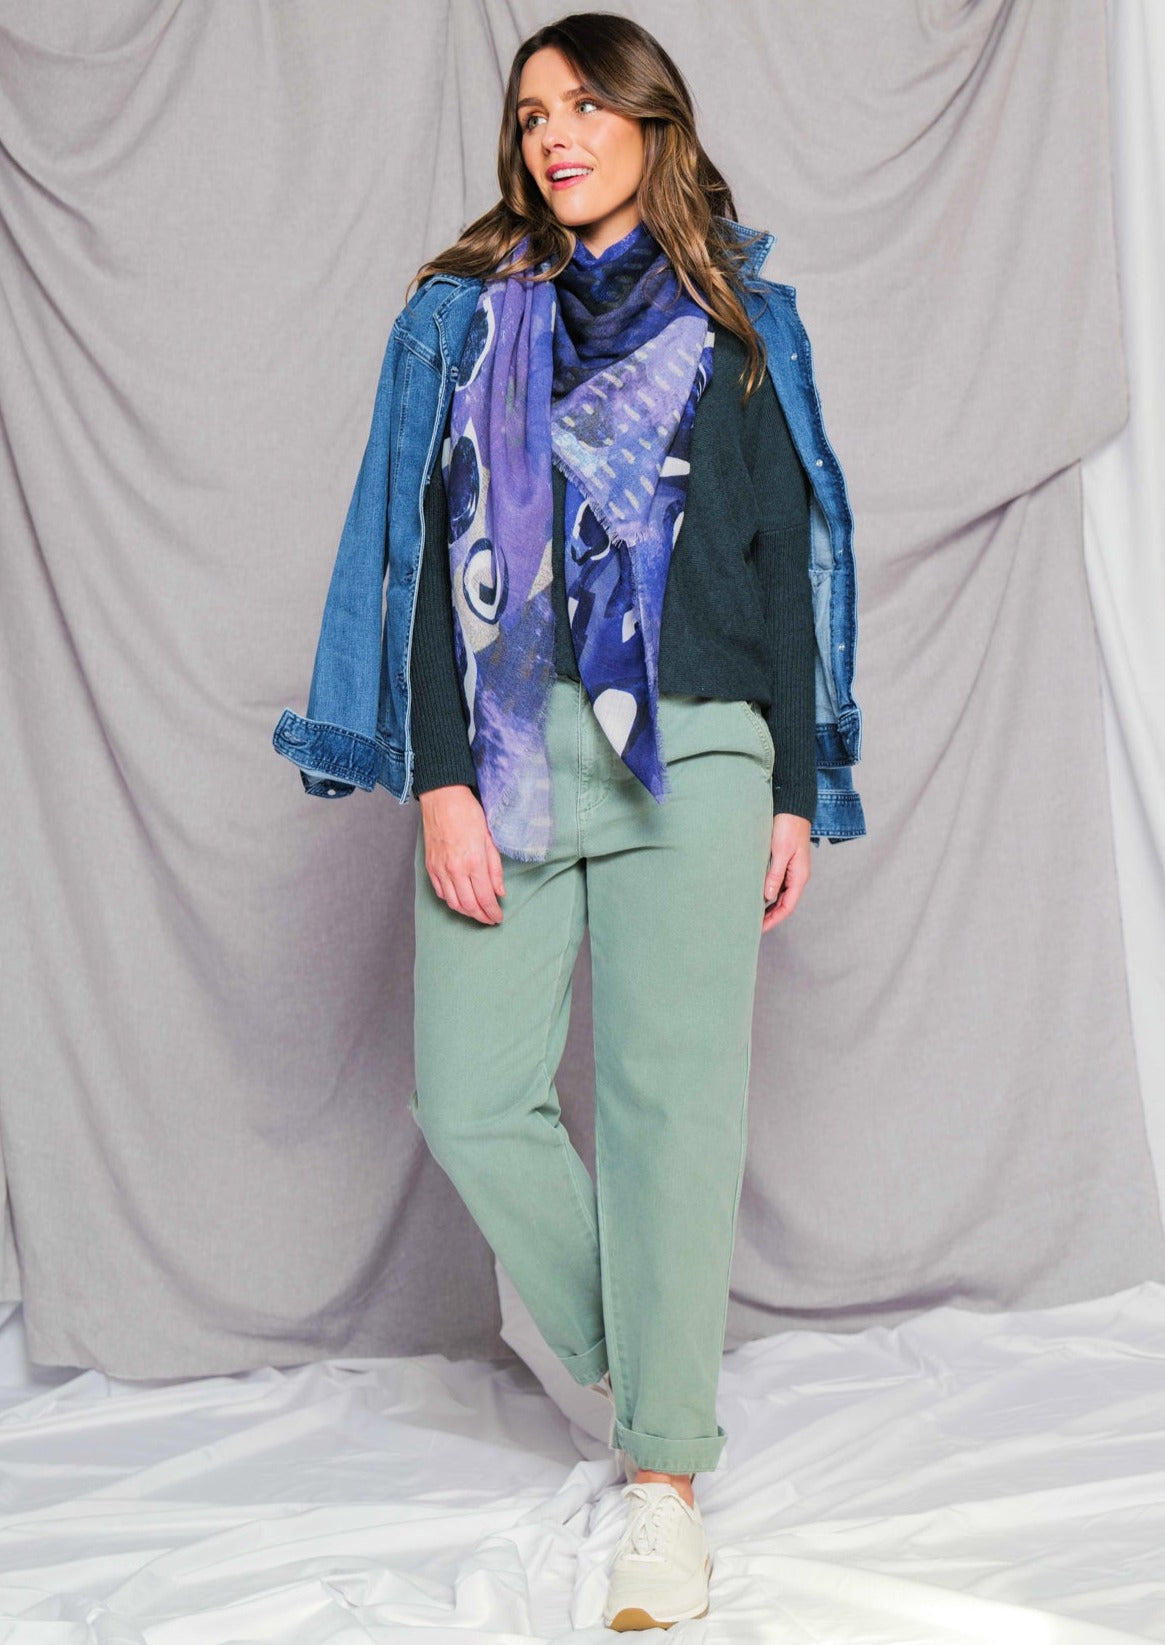 winter scarf styling fashion inspo